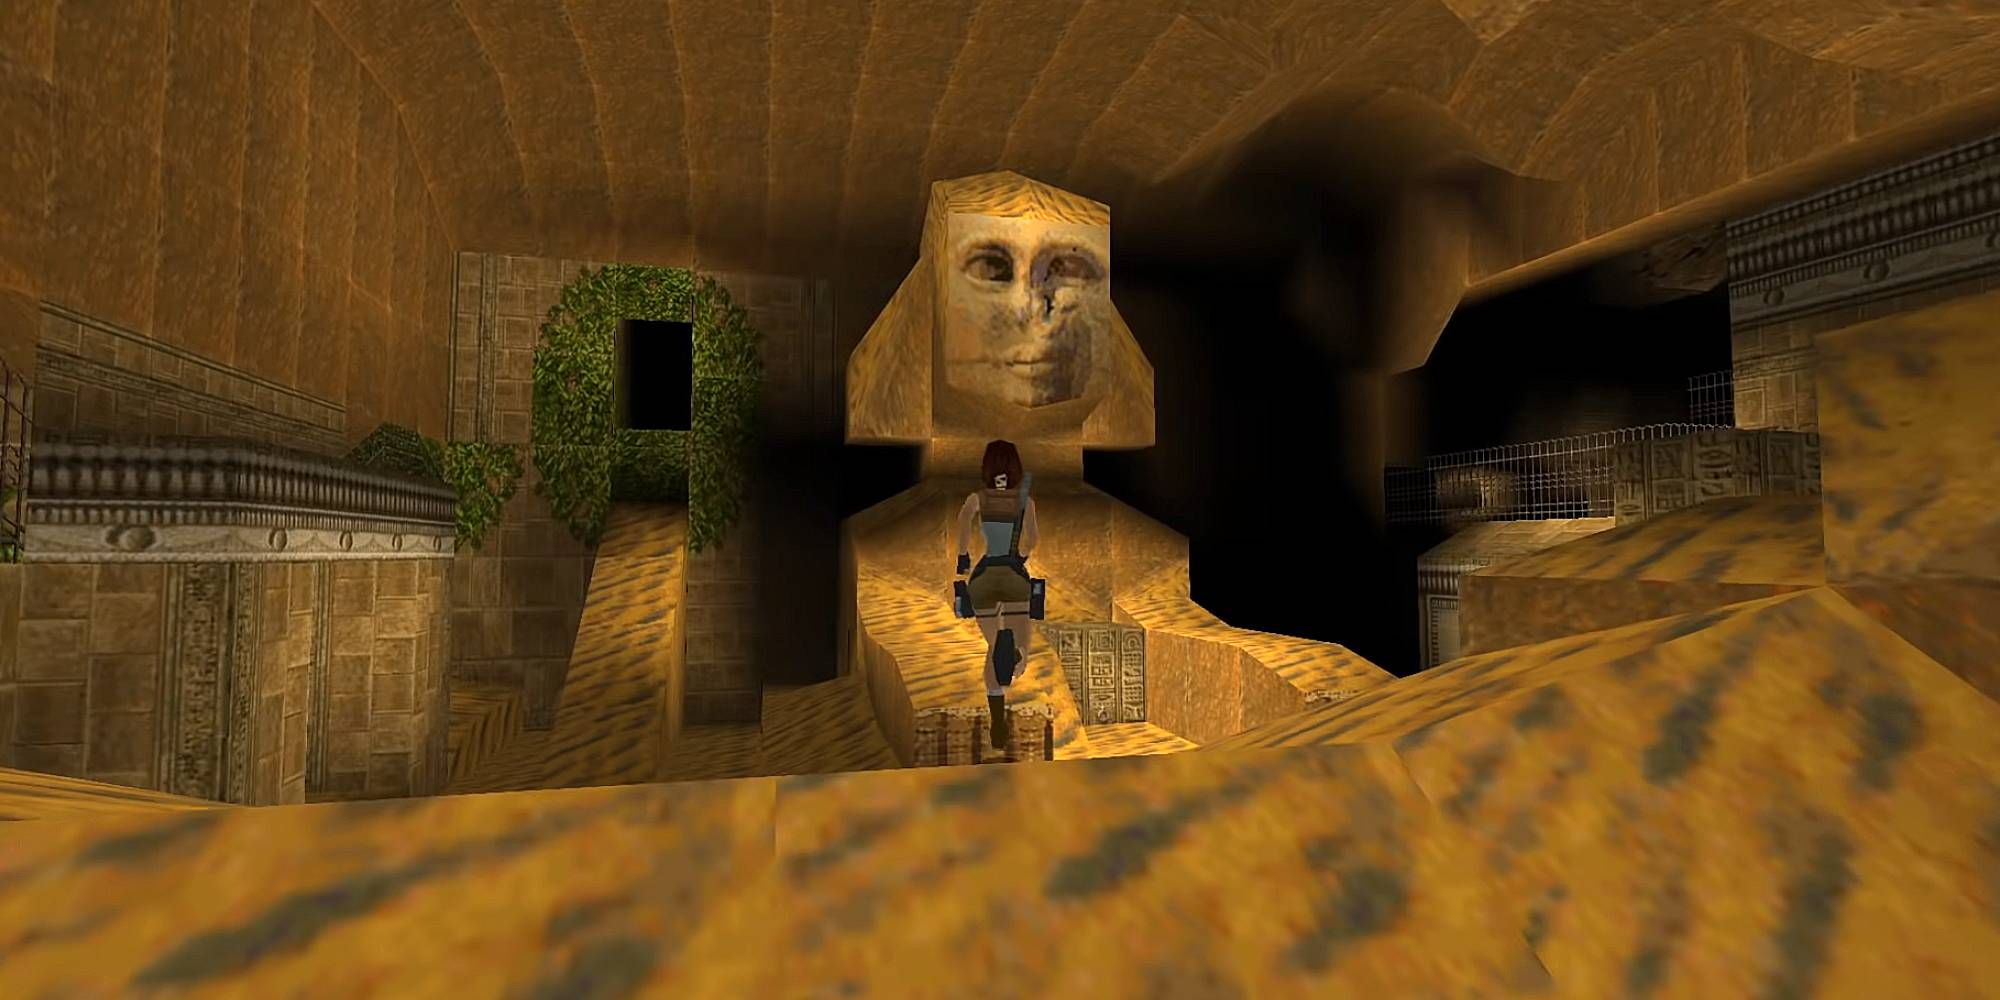 Lara Croft adventures in Egypt in Tomb Raider 1996